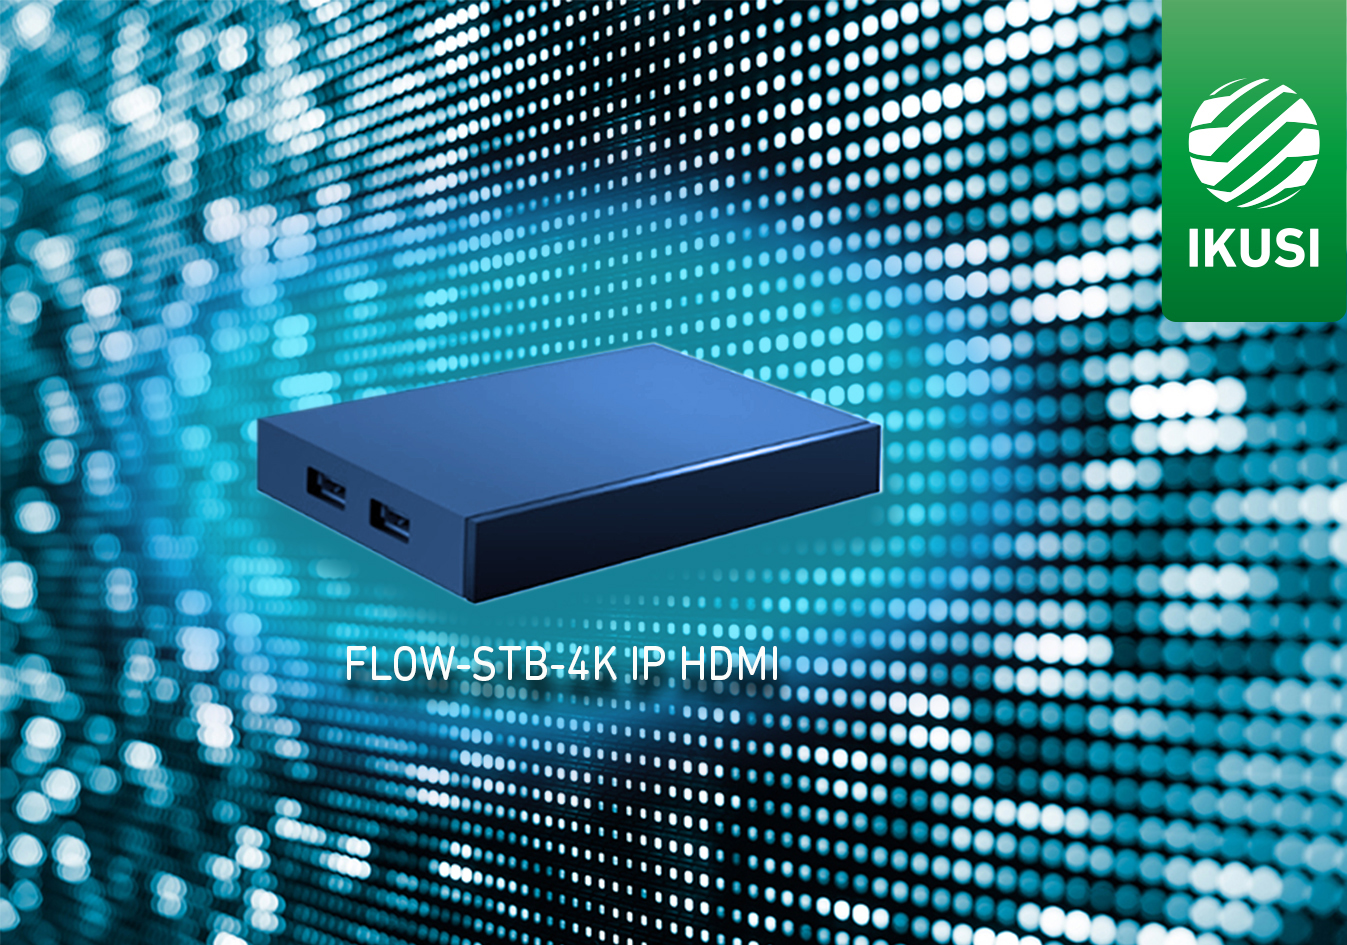 New FLOW-STB-4K receiver